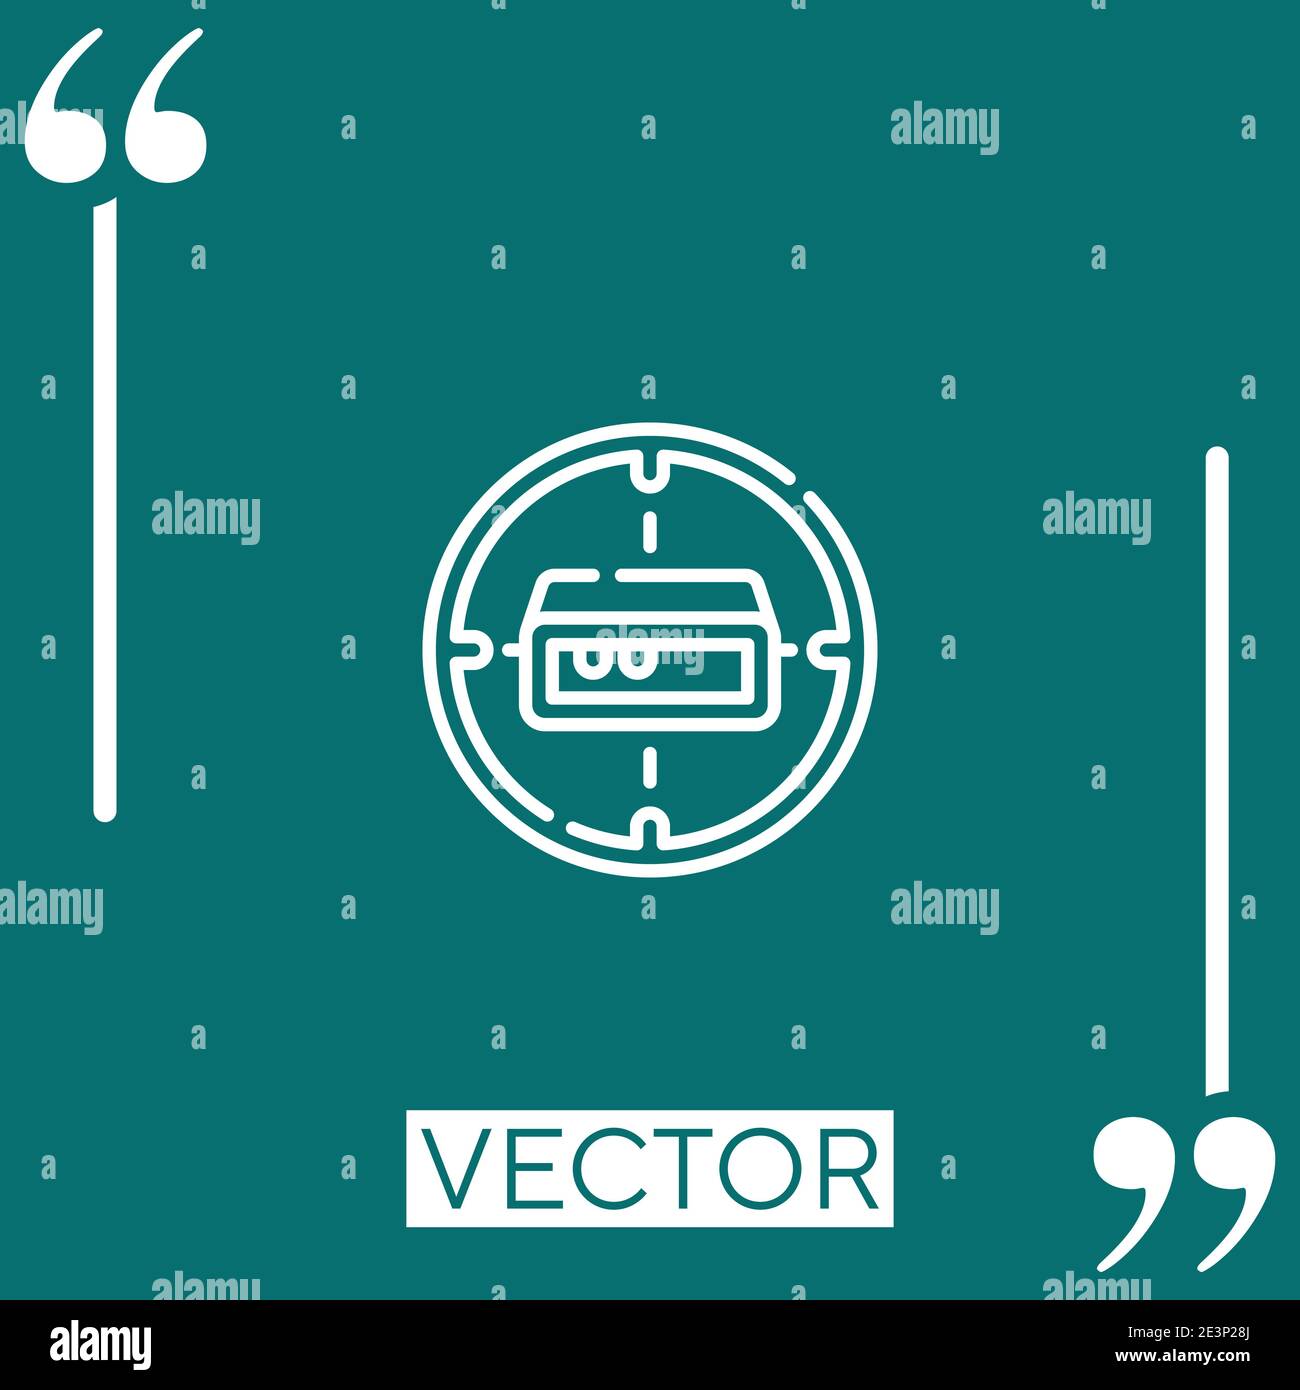 veracity vector icon Linear icon. Editable stroked line Stock Vector